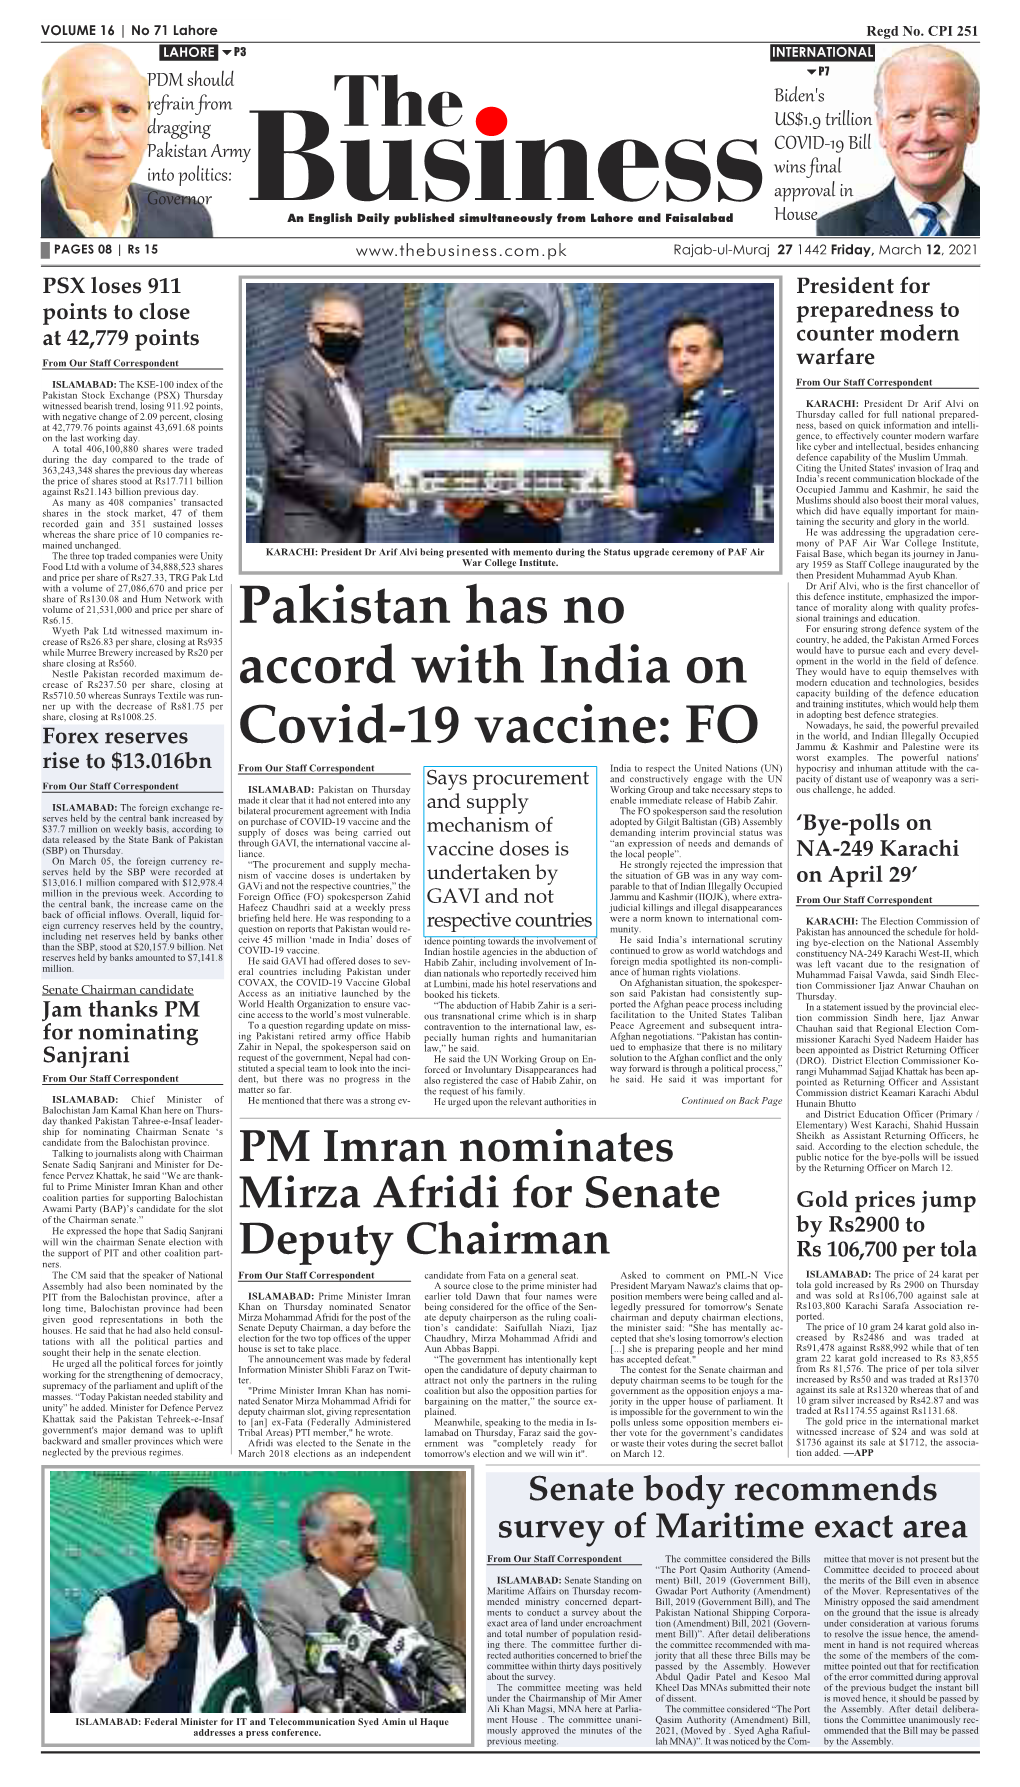 PM Imran Nominates Mirza Afridi for Senate Deputy Chairman